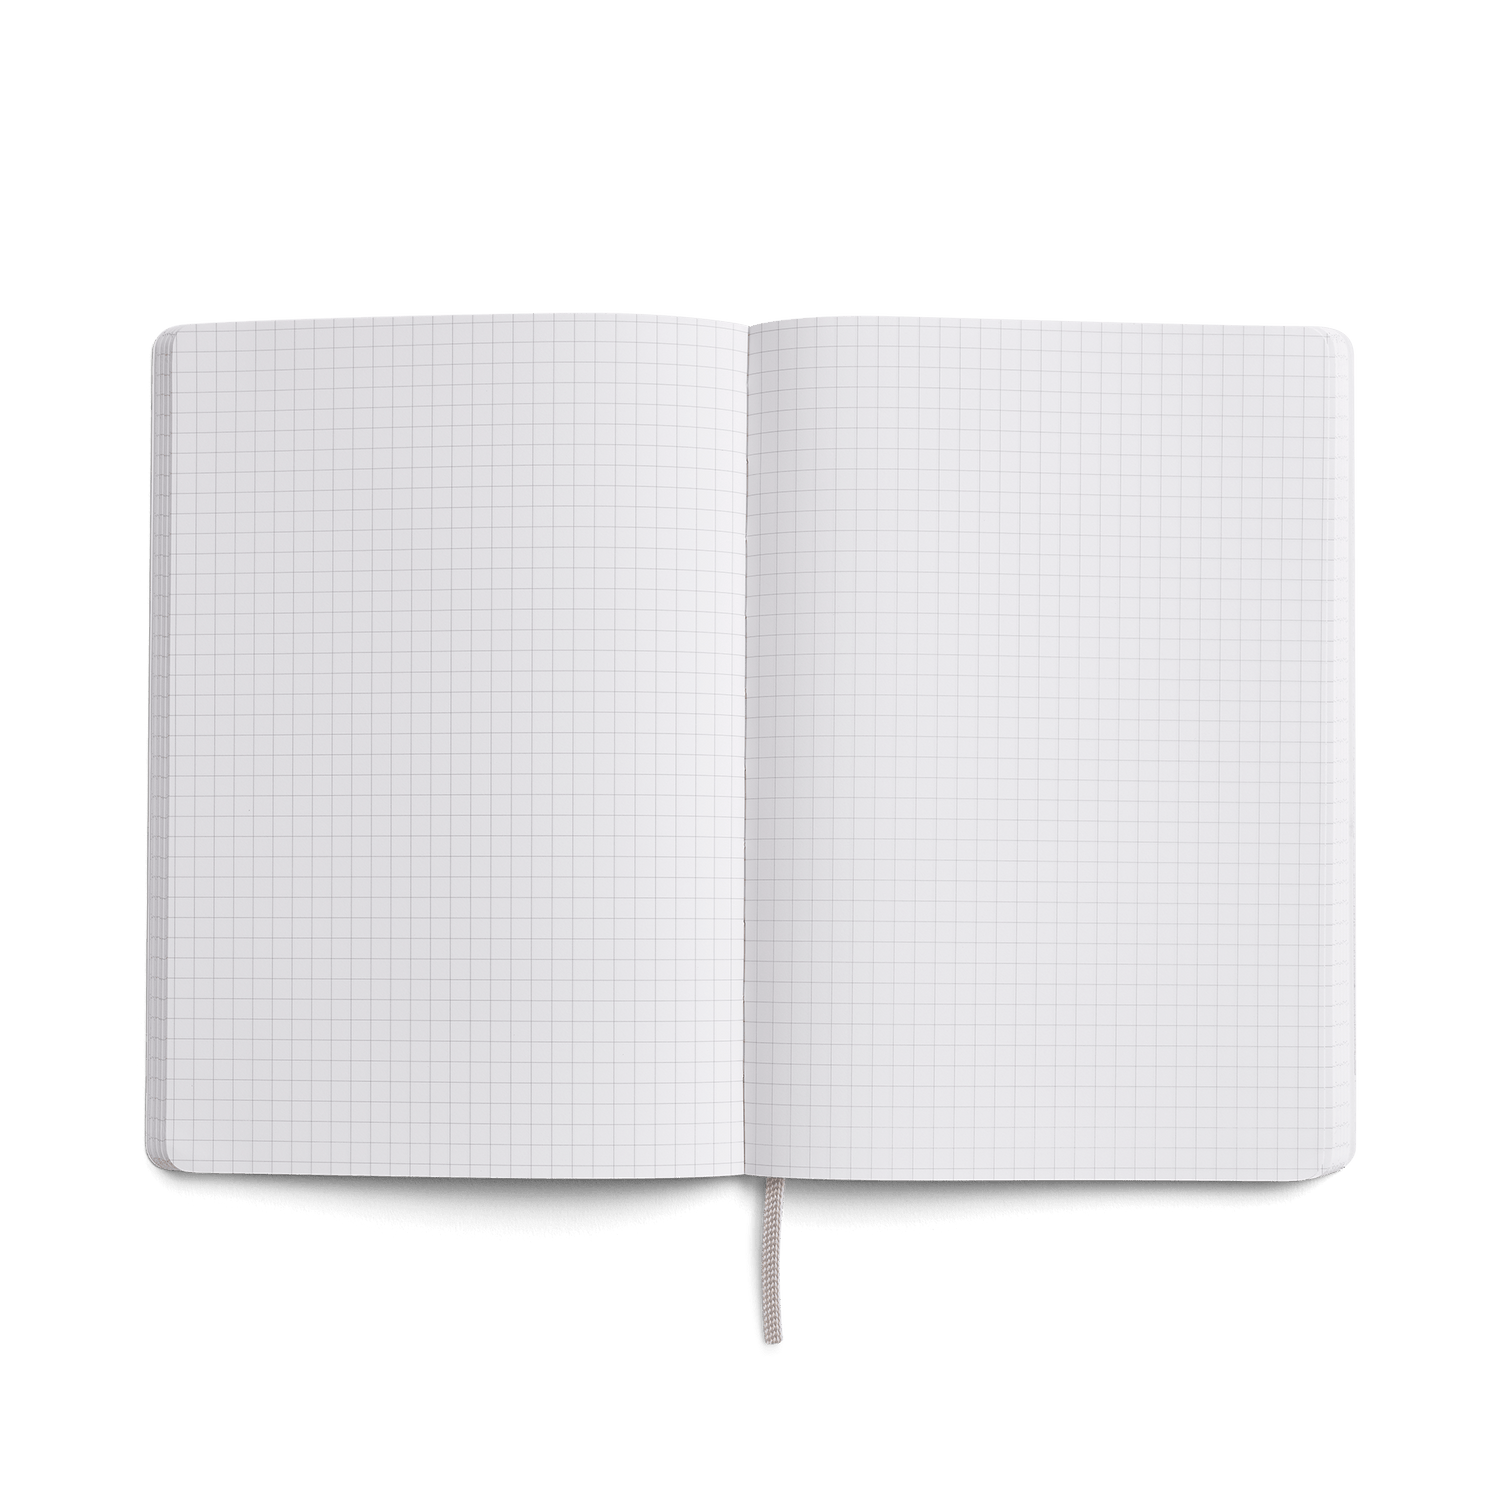 Custom Karst Stone Paper Softcover Notebook